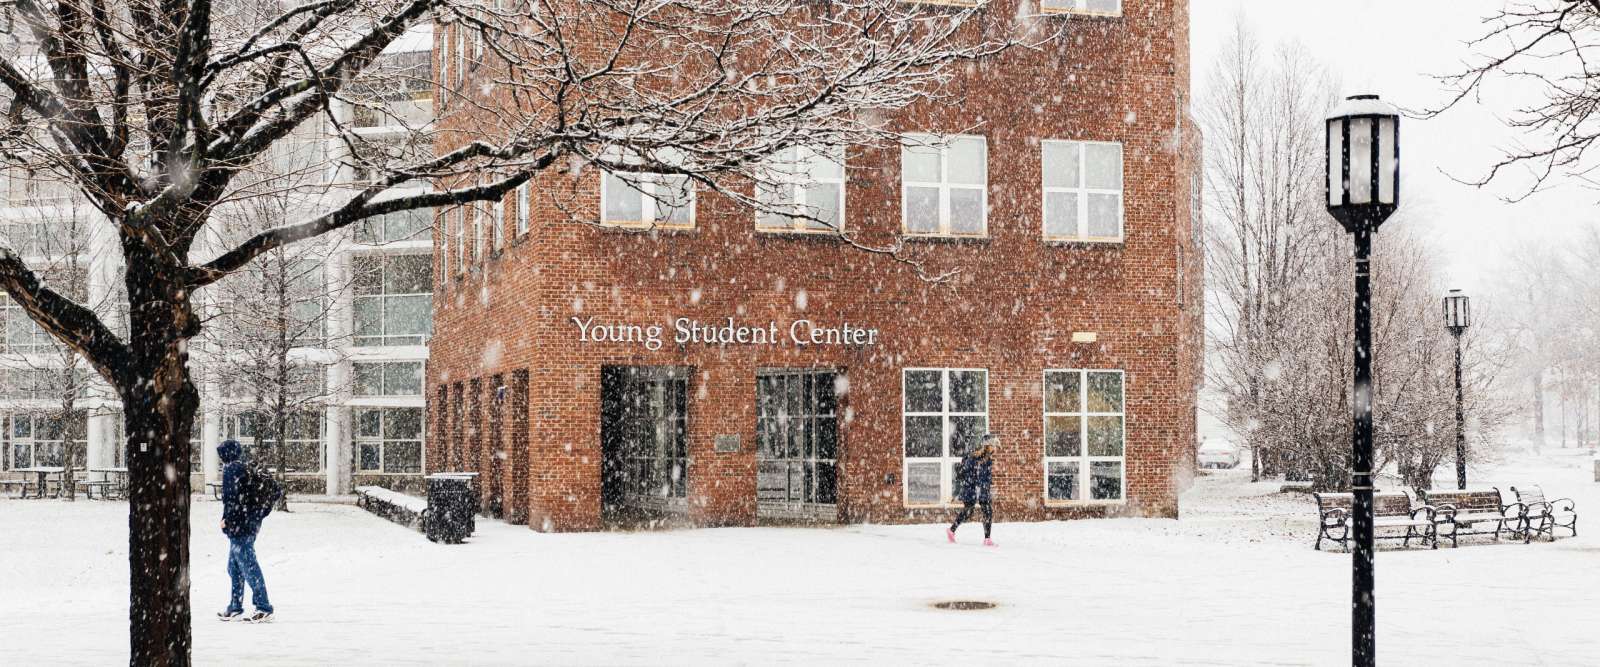 Snowfall on campus